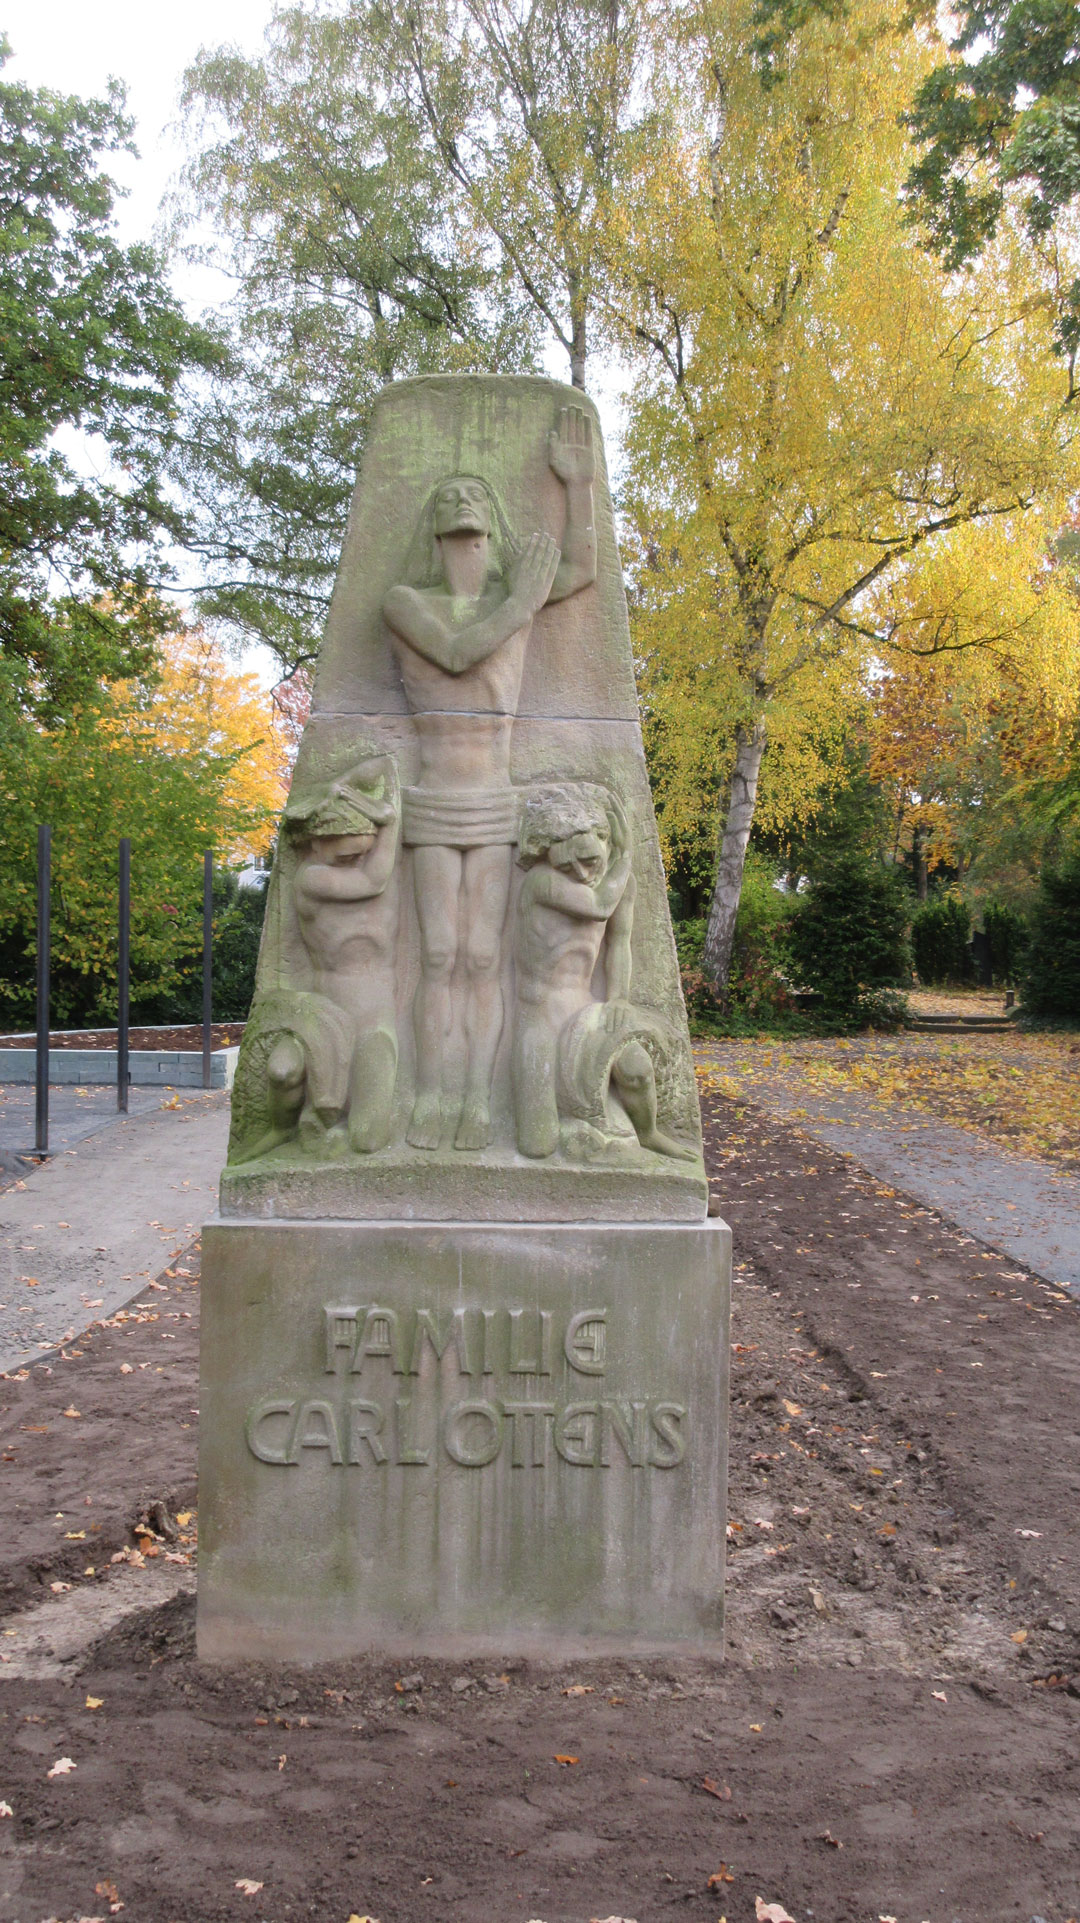 Memoriamgarten mit dem Grabmal der Familie Carl Ottens